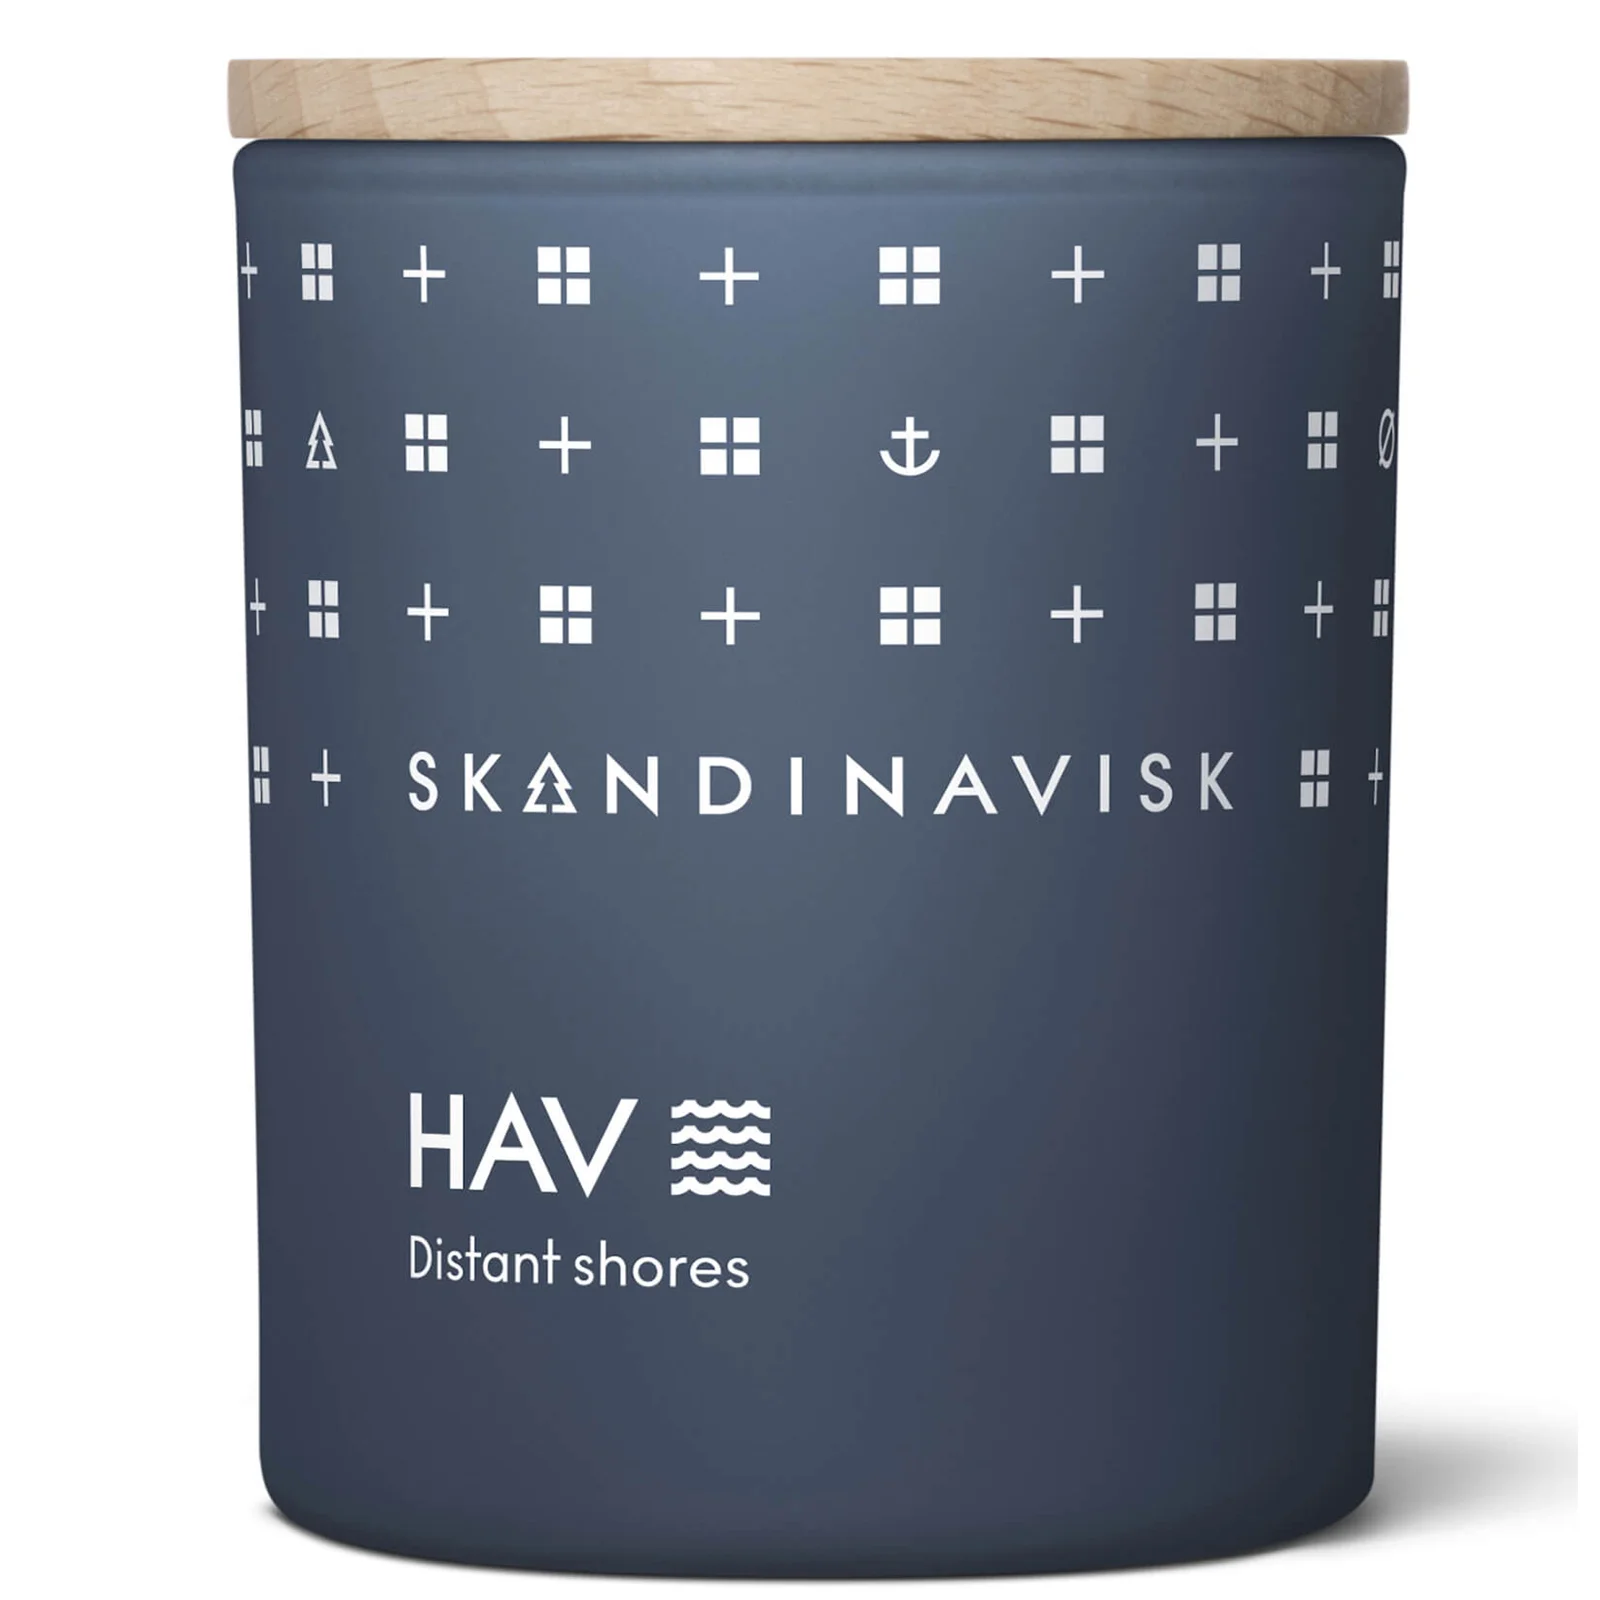 SKANDINAVISK Scented Mini Candle - Hav Image 1